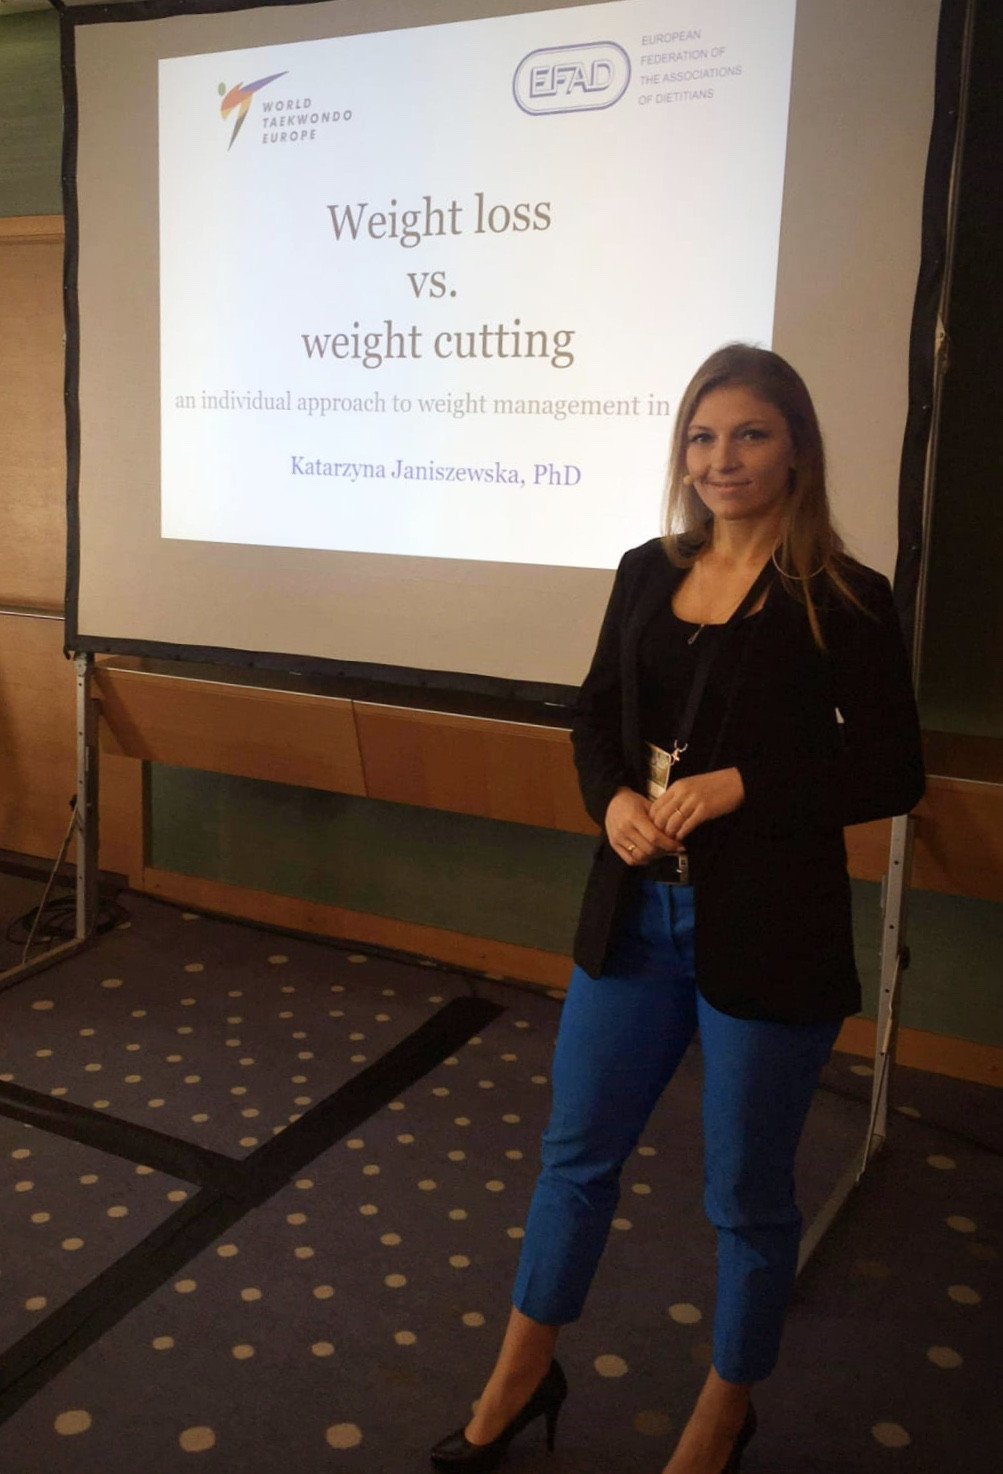 Katarzyna Janiszewska has been working on a joint position statement for taekwondo weight management ©WTE